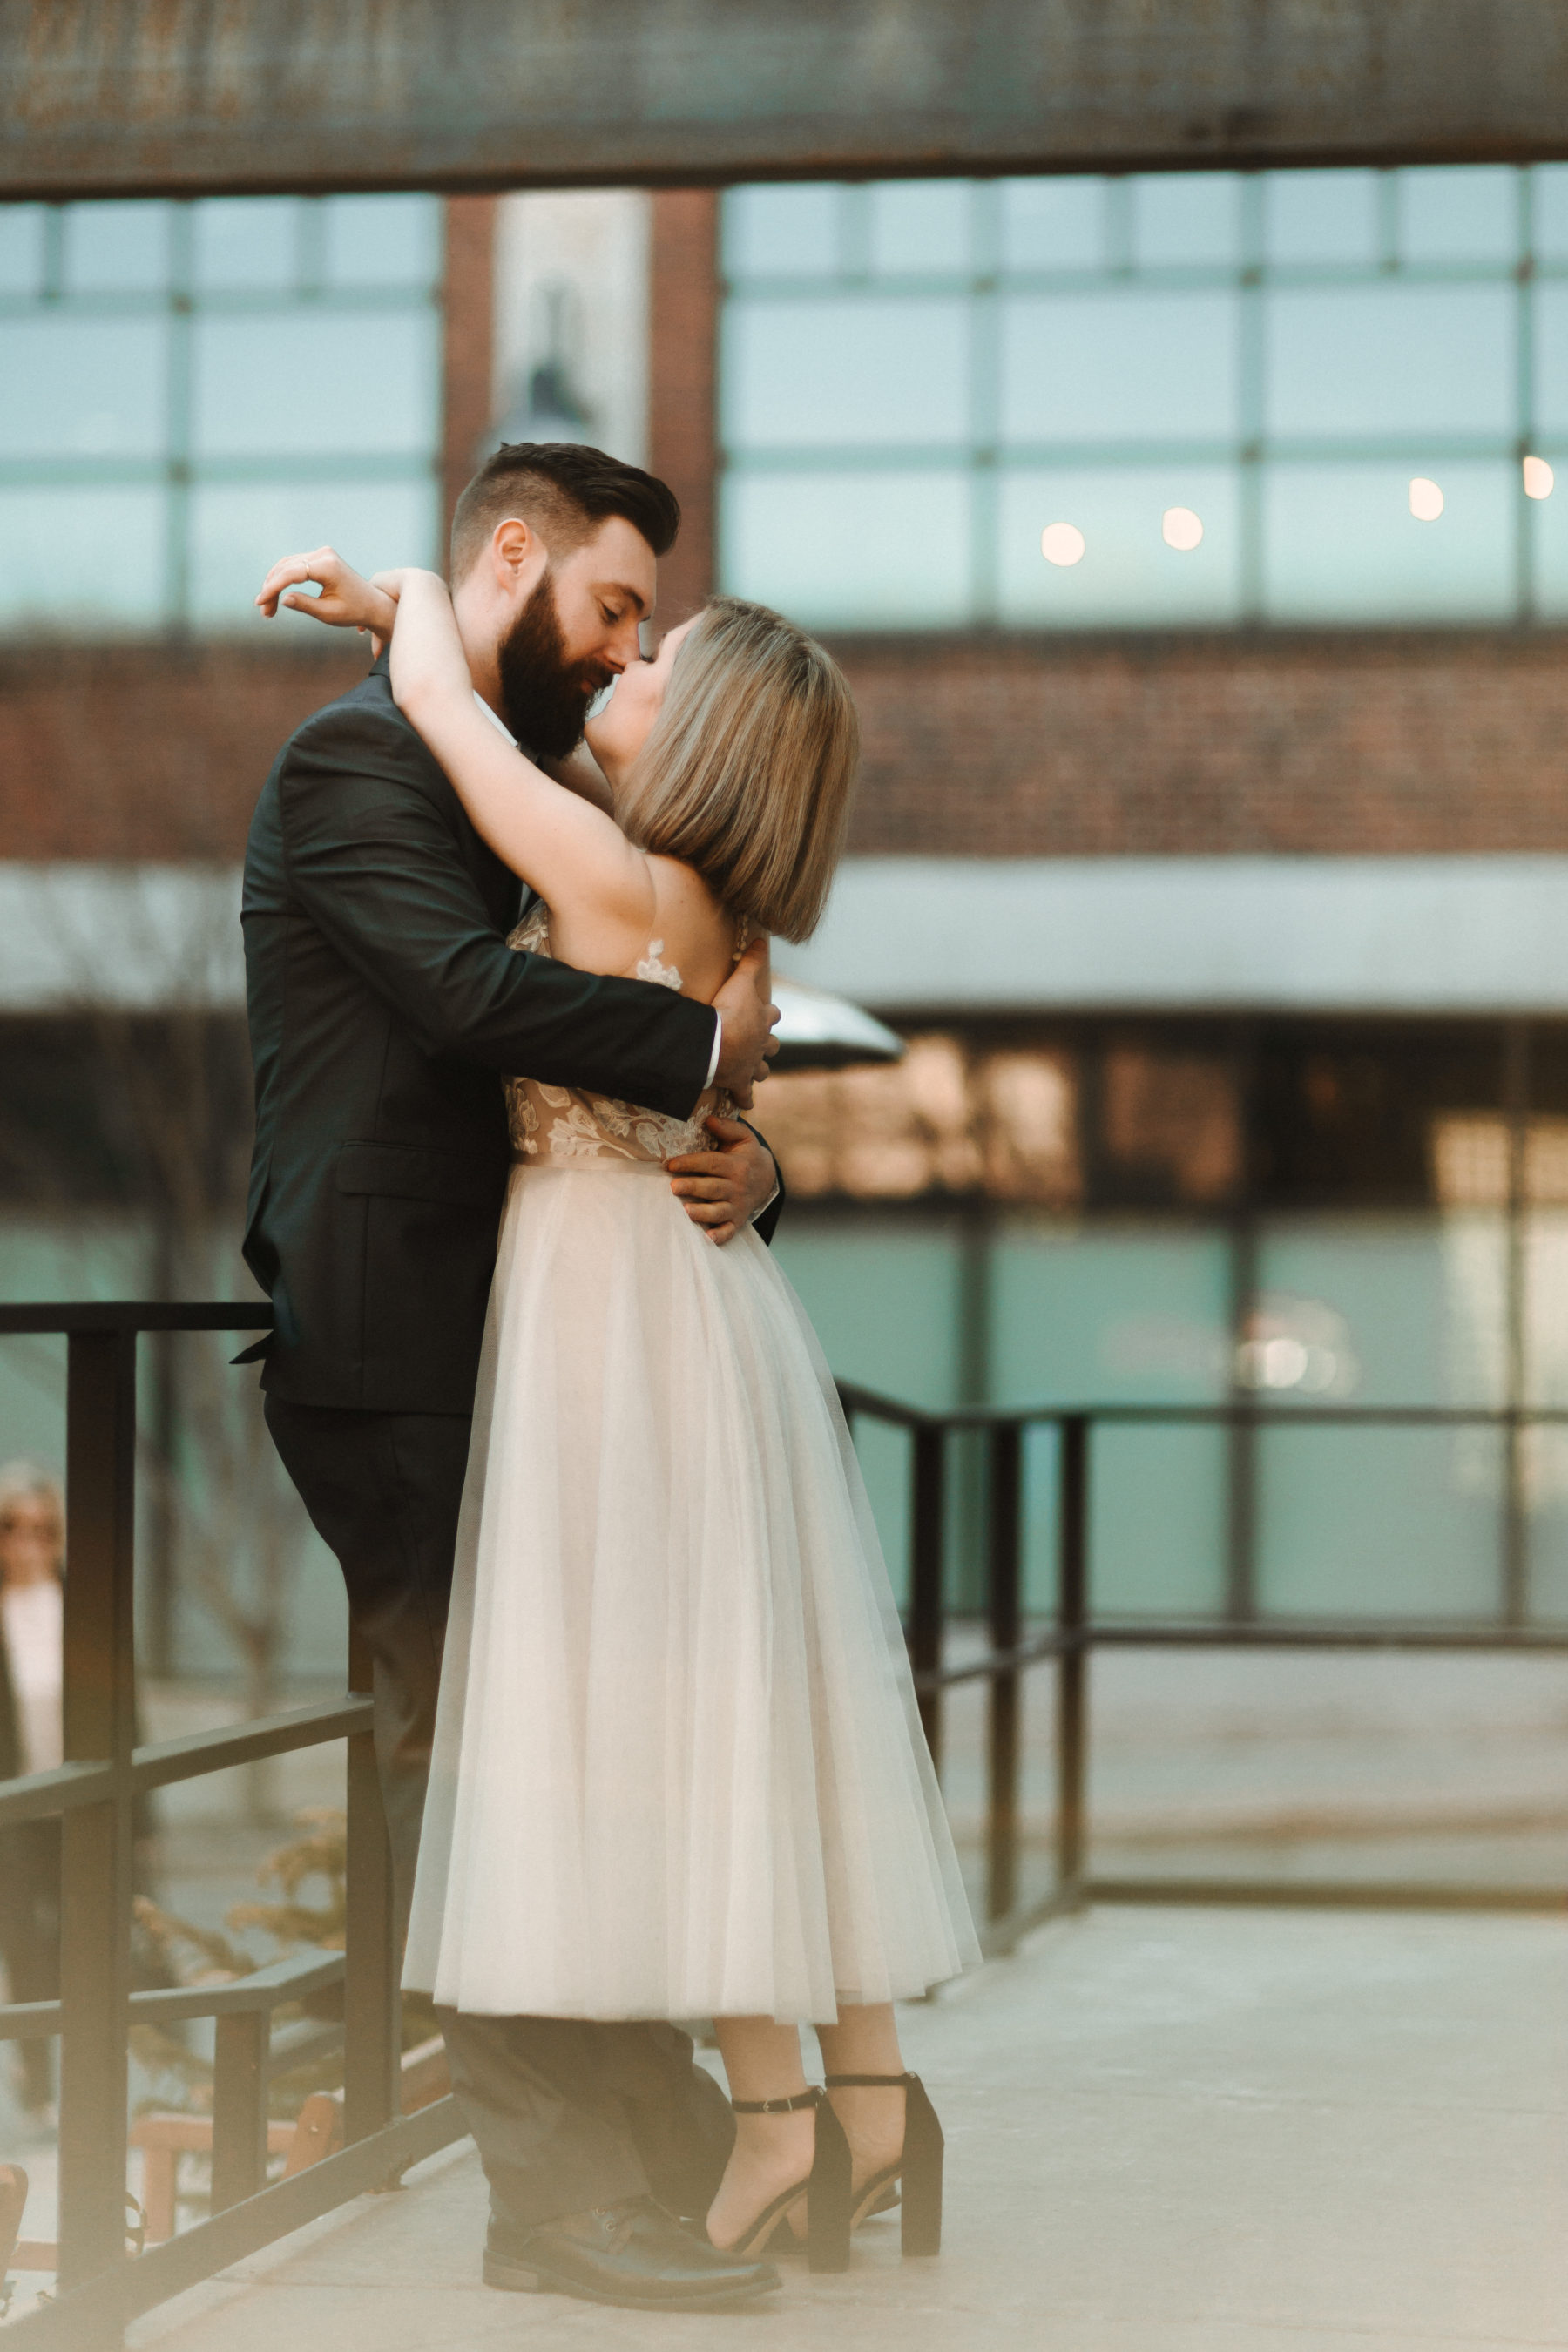 Nashville Wedding Photographer: Nashville brunch elopement featured on Nashville Bride Guide